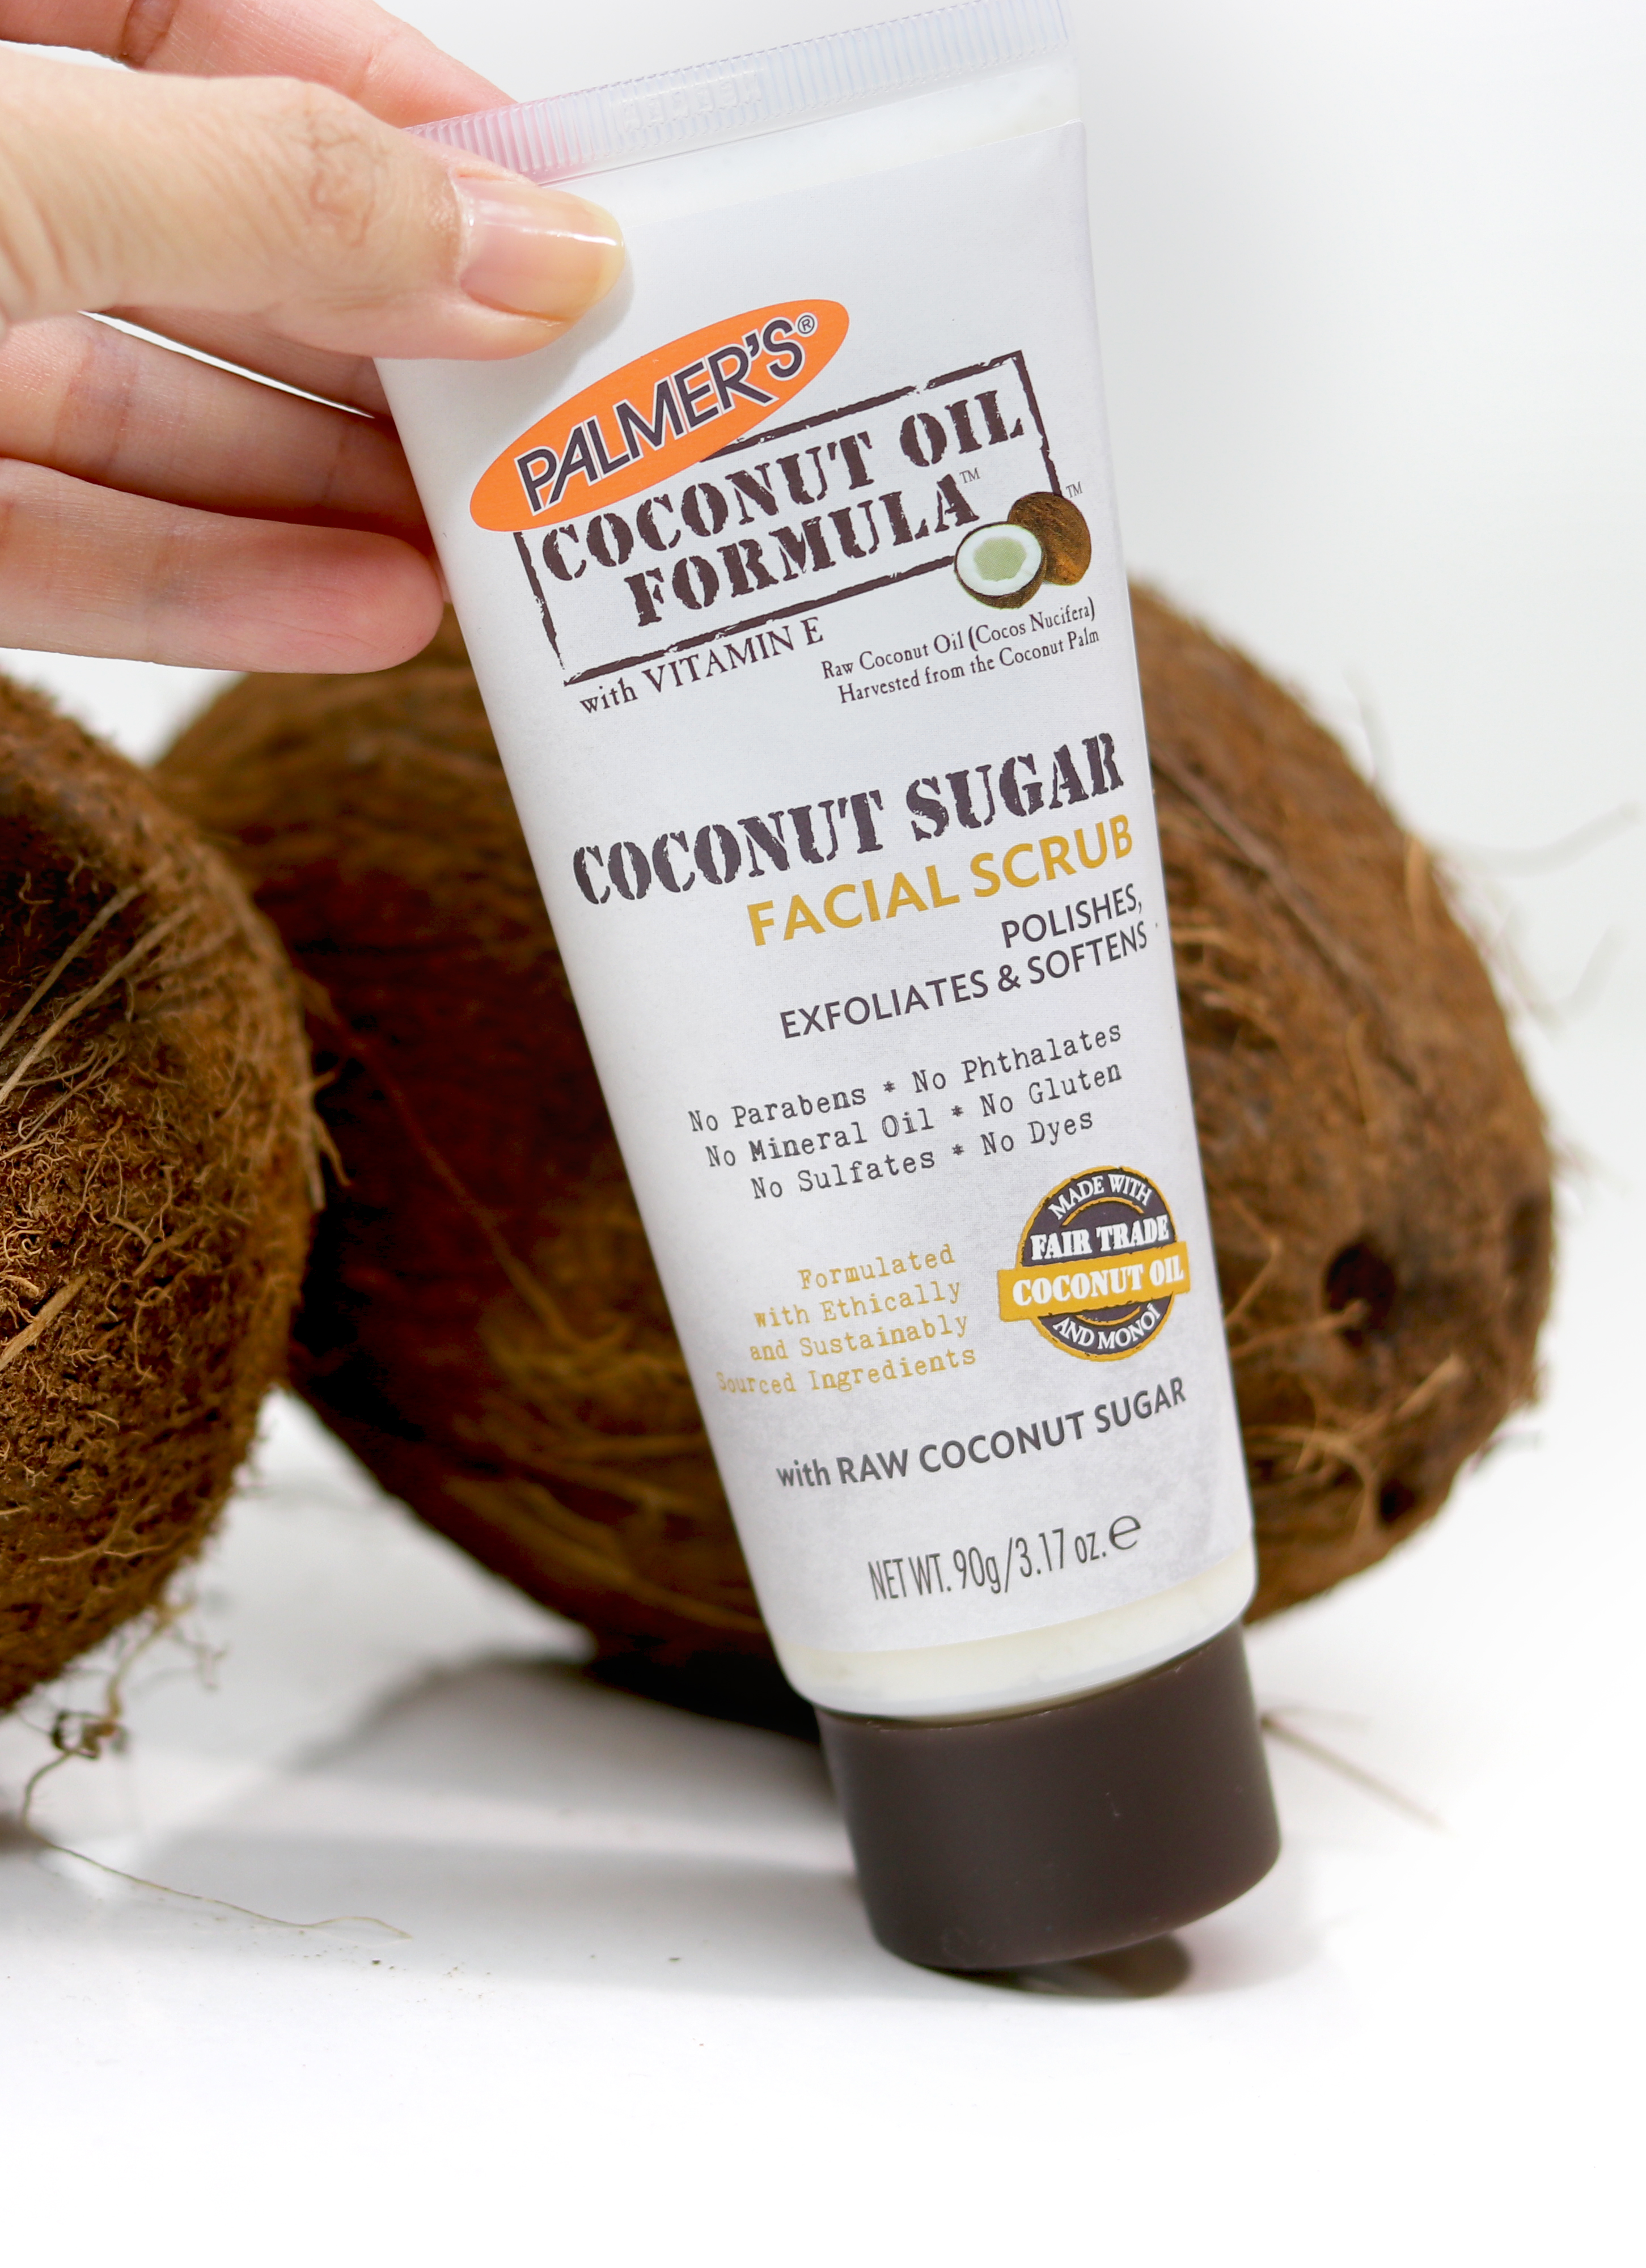 Palmer's Coconut Oil Formula Coconut Sugar Facial Scrub